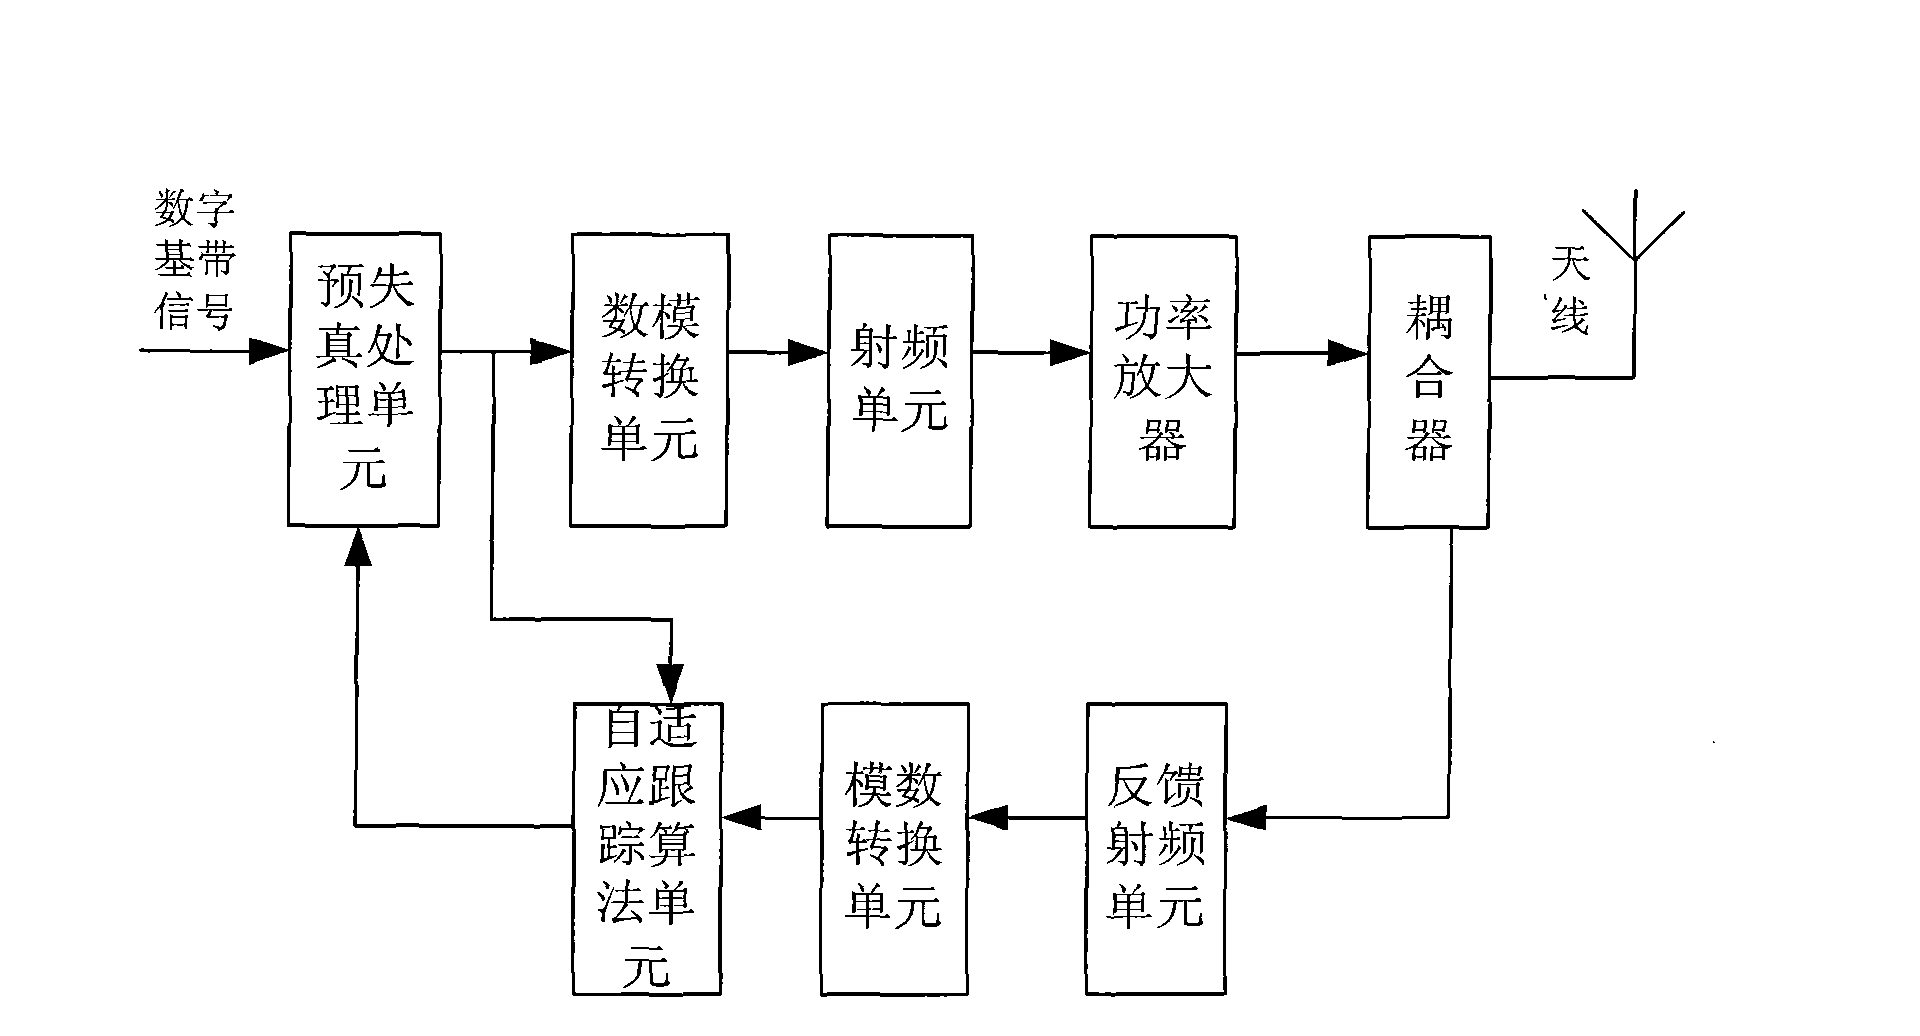 Transmitter and transmitter signal processing method